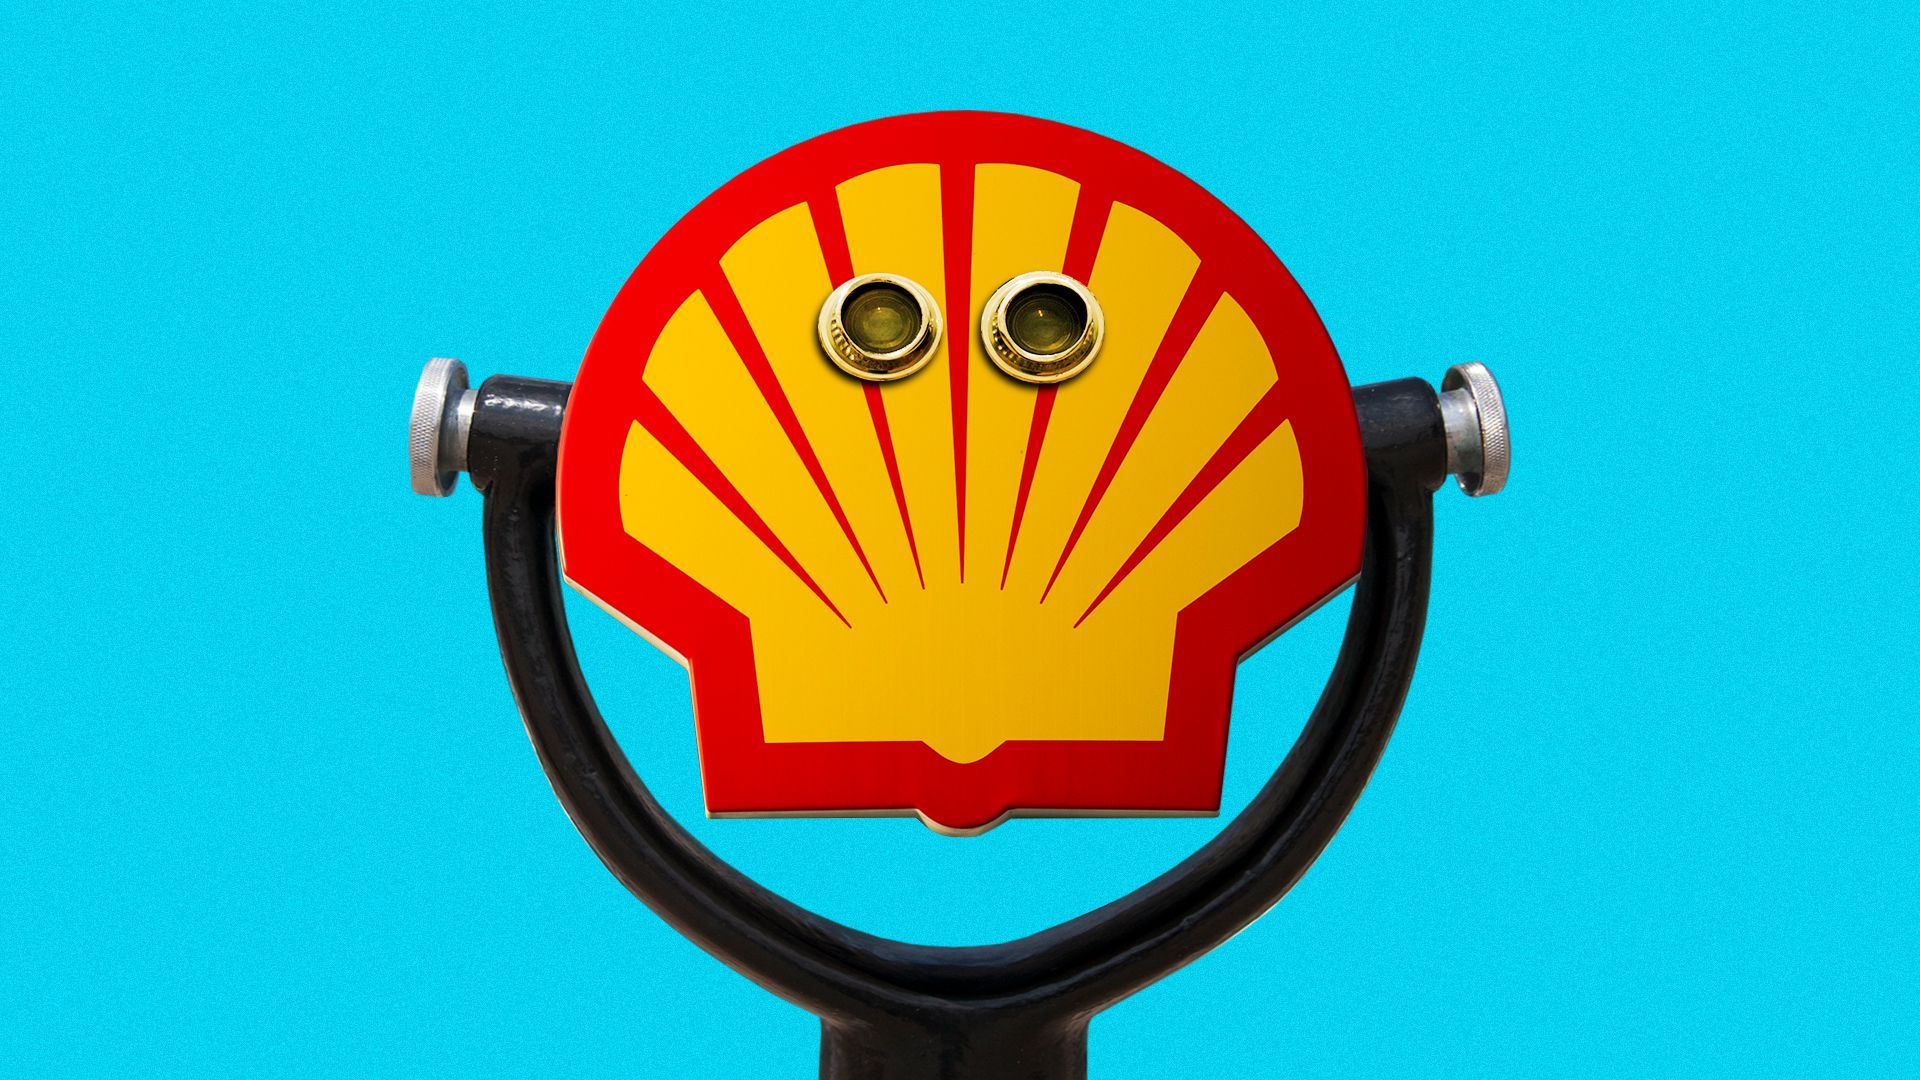 Illustration of sea binoculars made from a Shell logo 